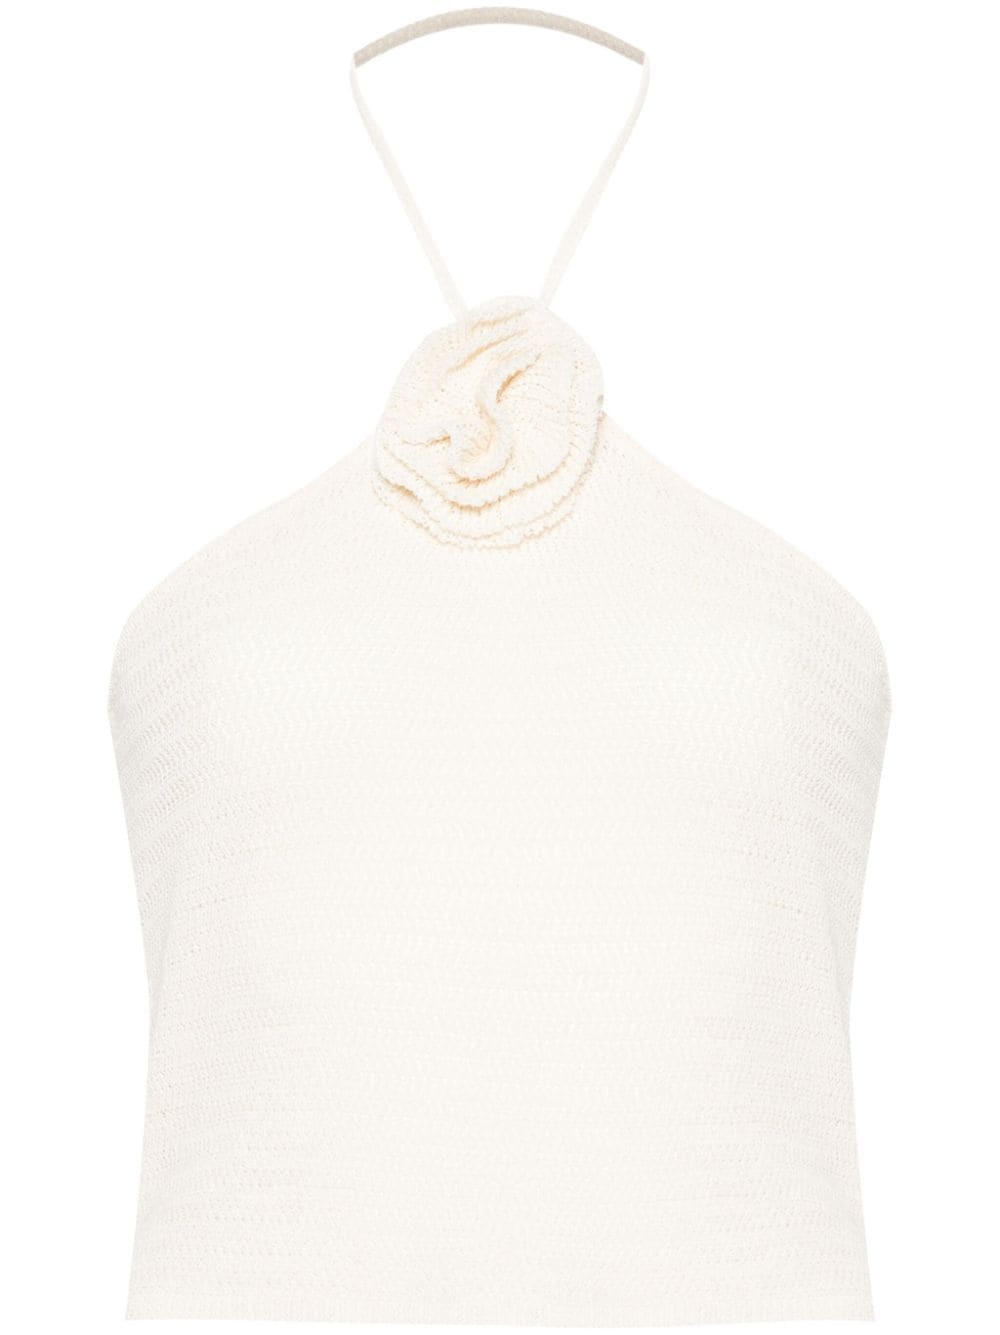 Eleonora Gottardi Roses Halterneck Knitted Top In White